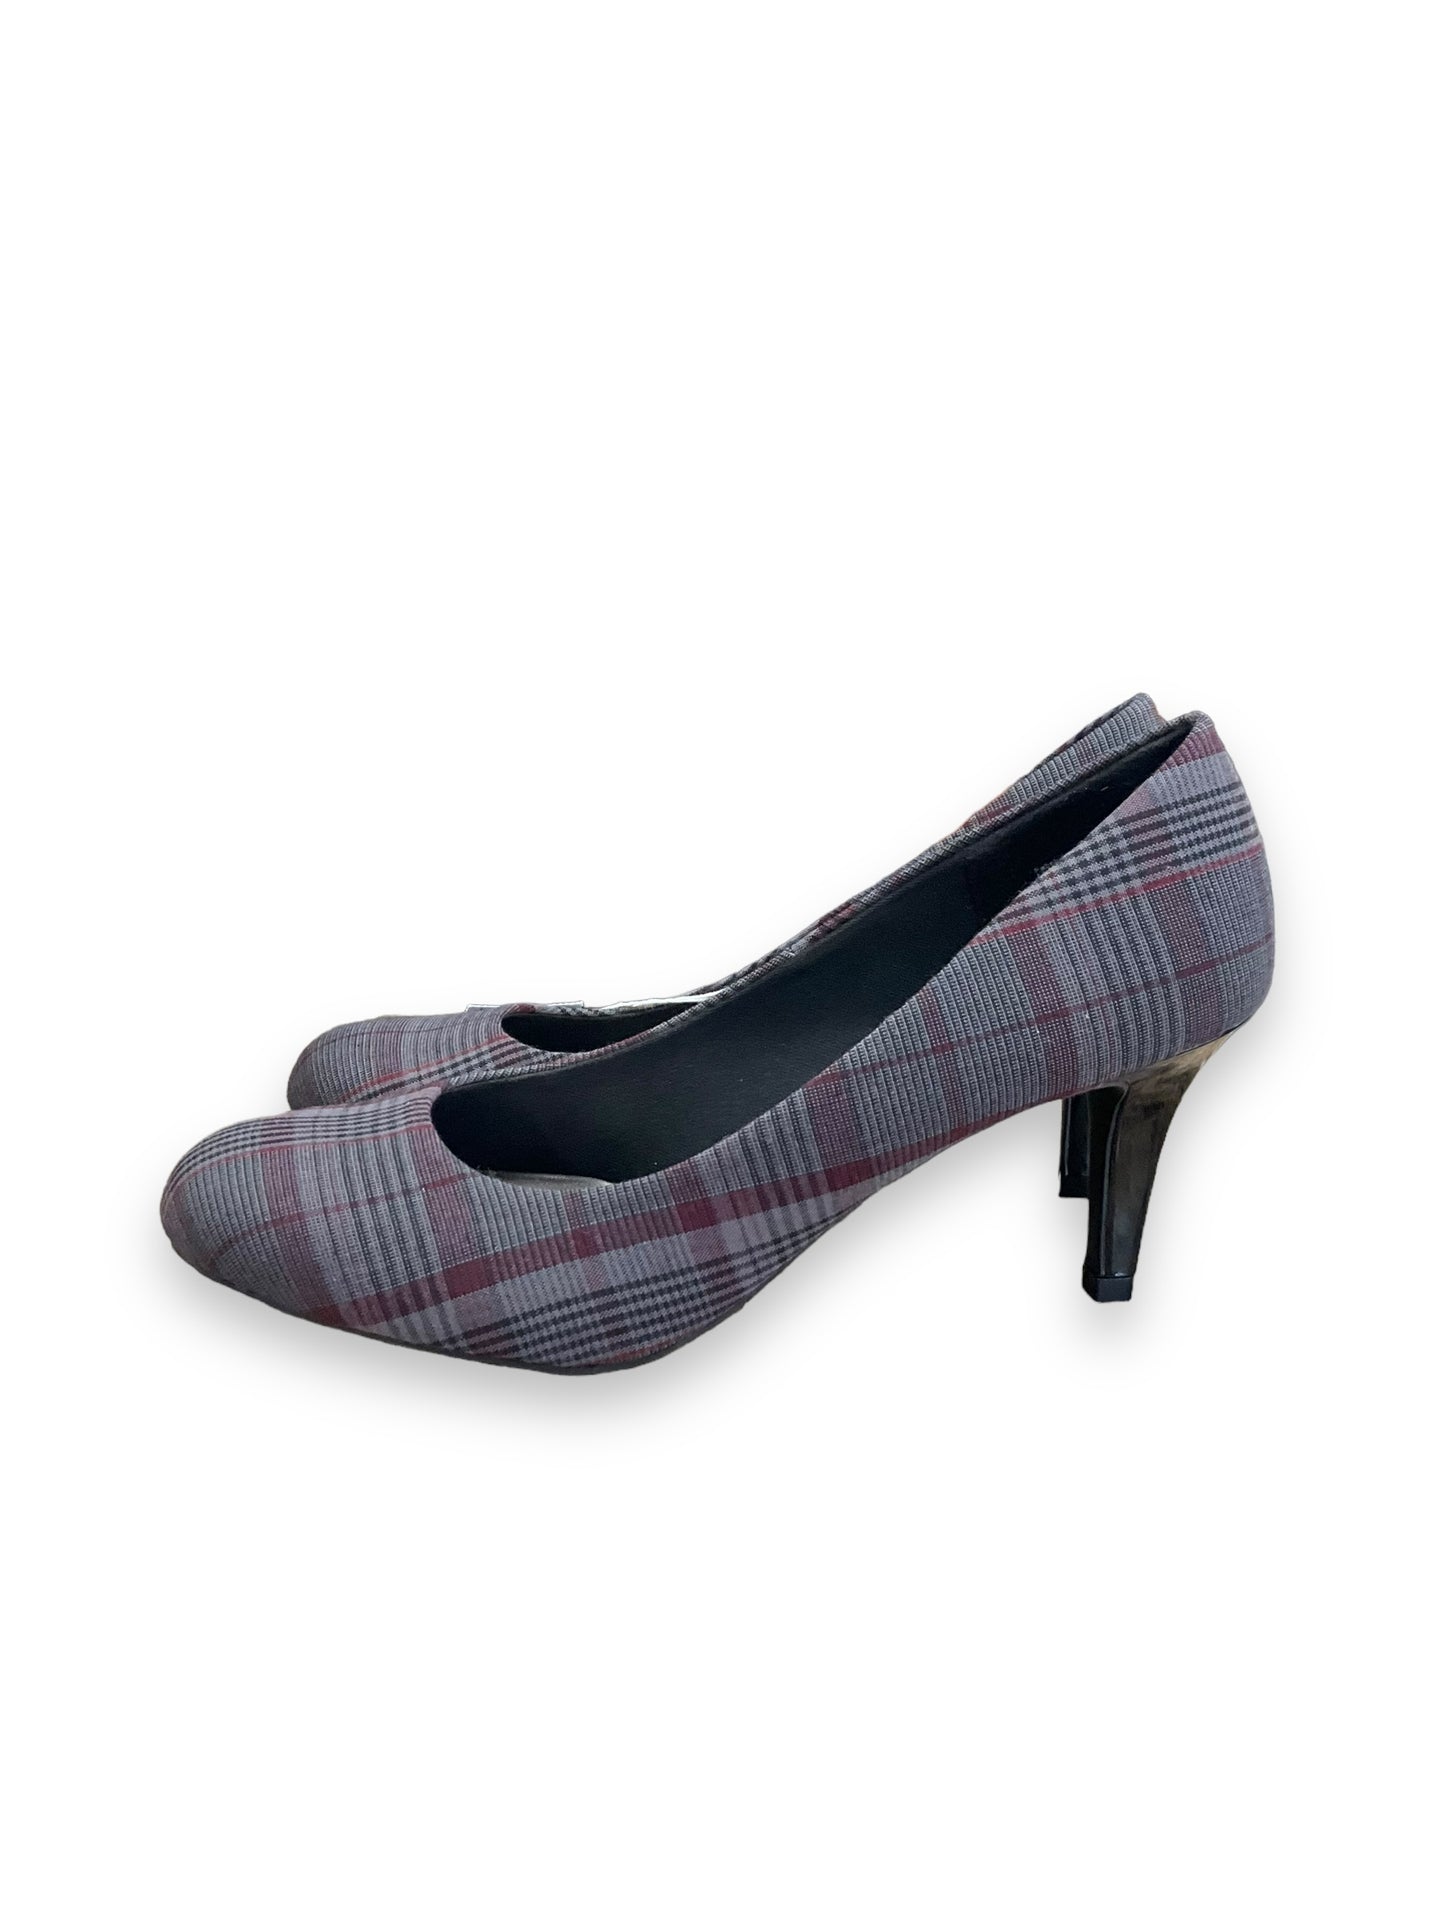 Shoes Heels Stiletto By Comfort Plus  Size: 8